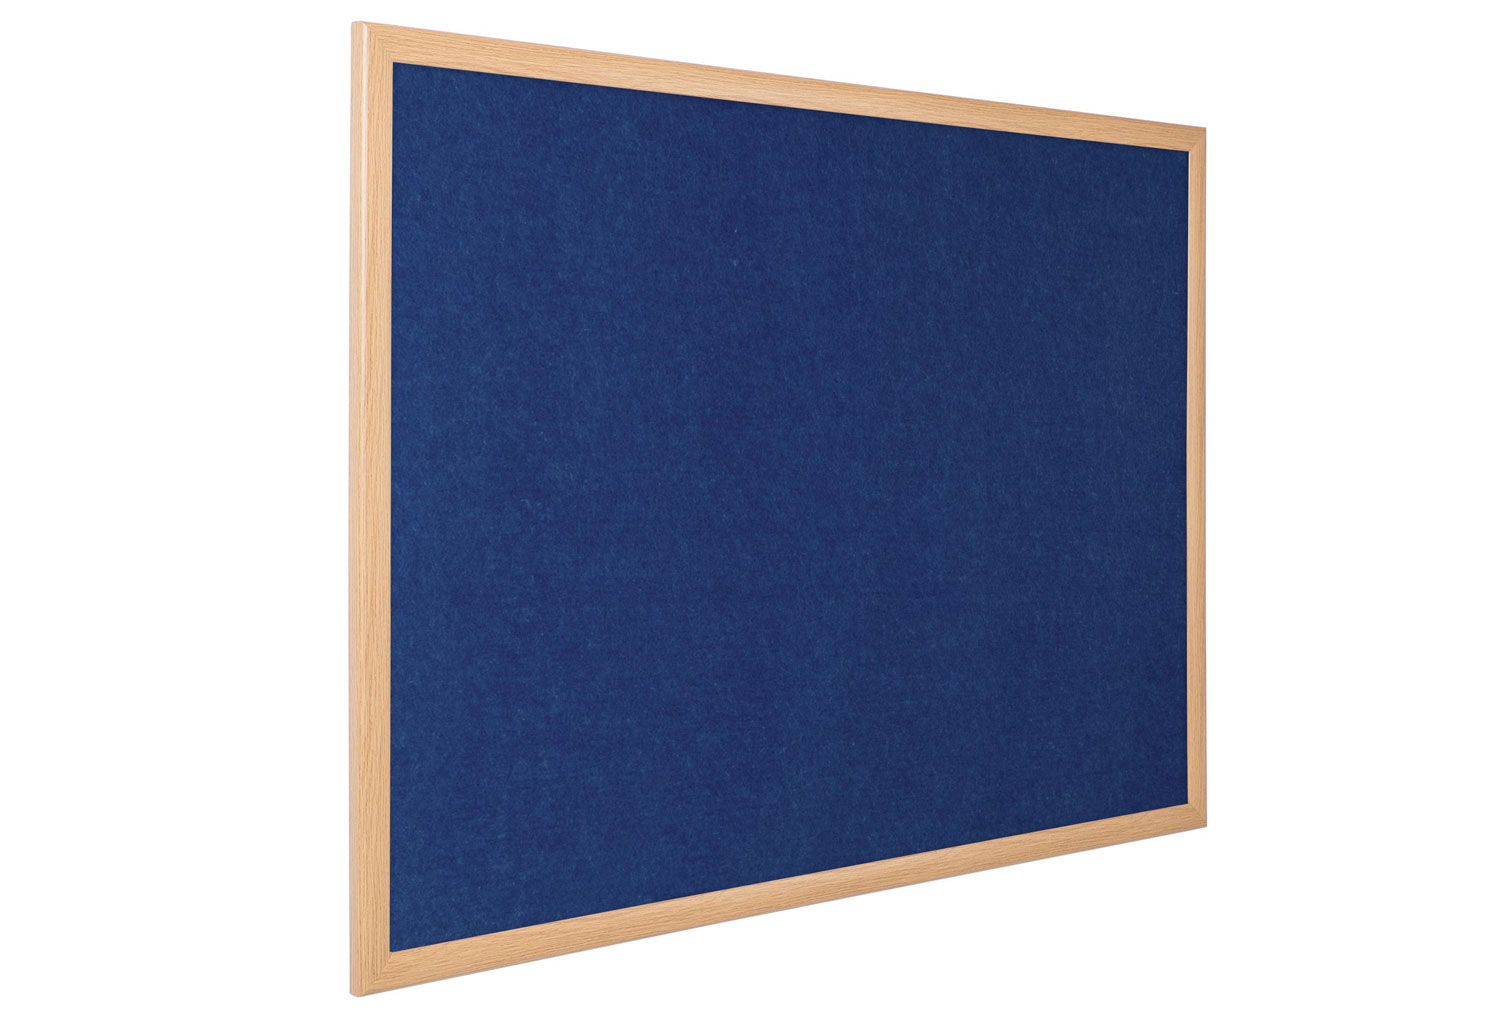 Eco-Colour Light Oak Noticeboard, 180wx120h (cm), Oak Frame/ Blue